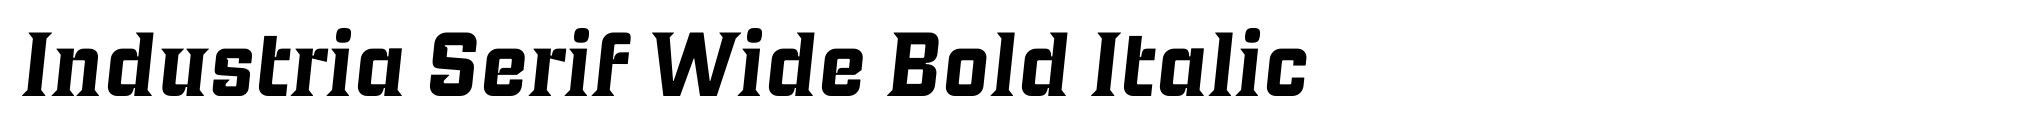 Industria Serif Wide Bold Italic image